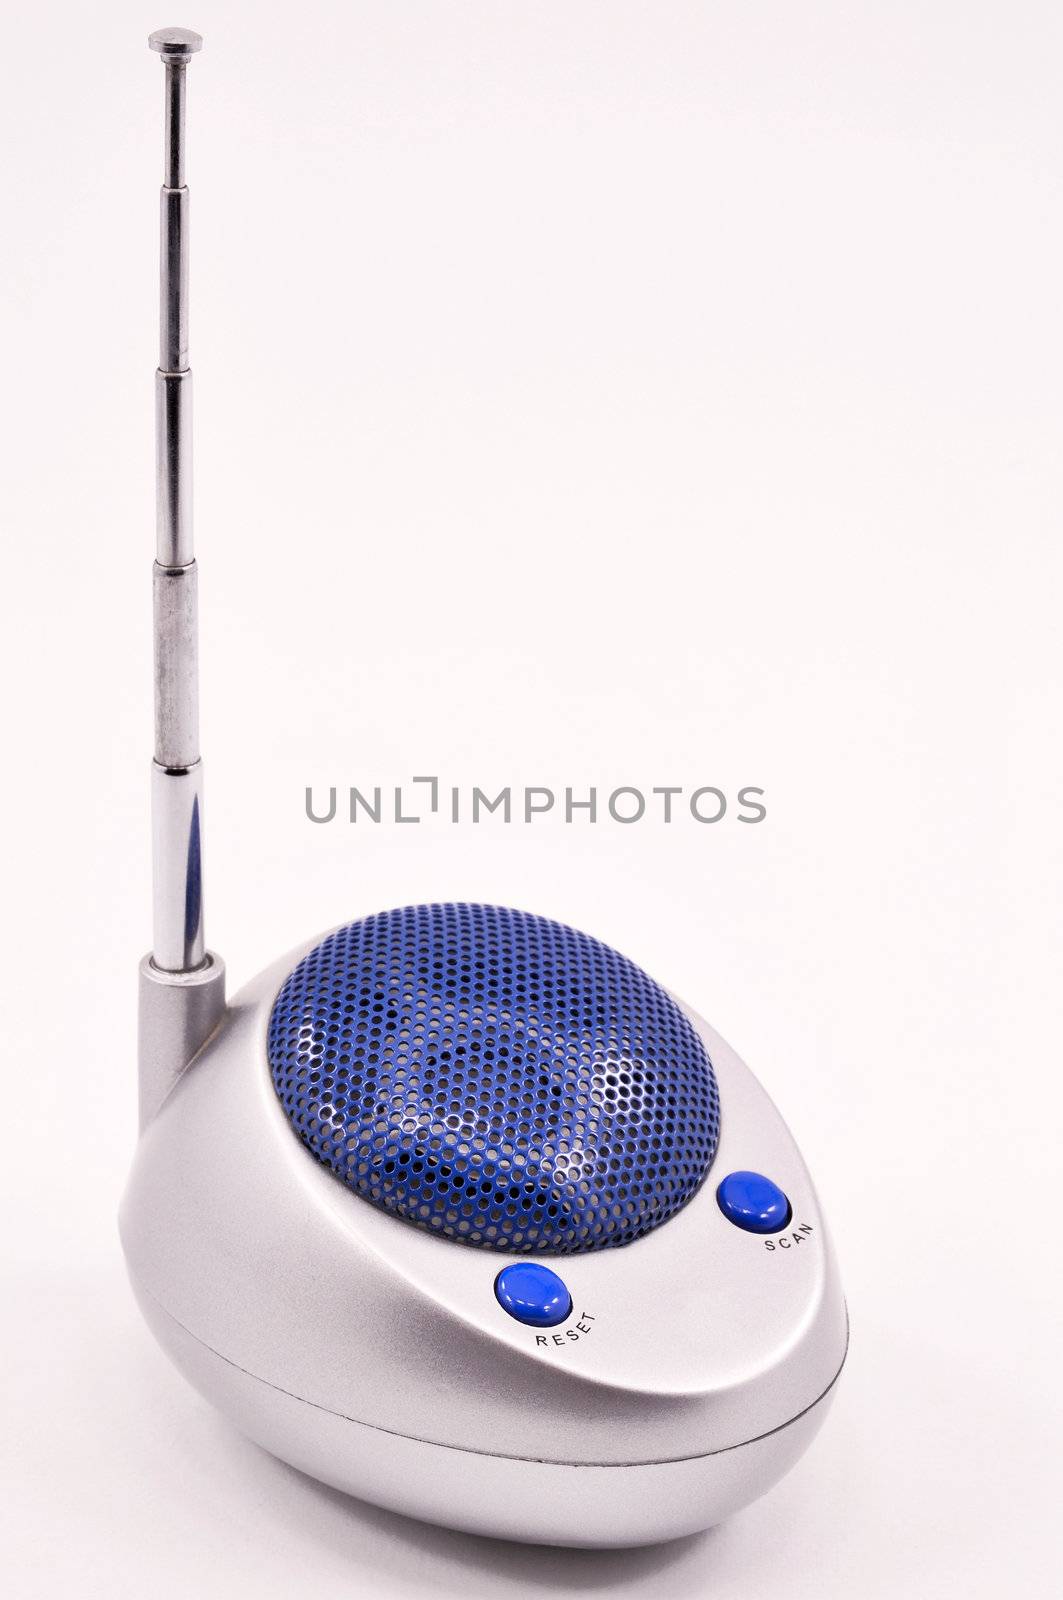 	
Miniature radio with advanced antenna on a white background
